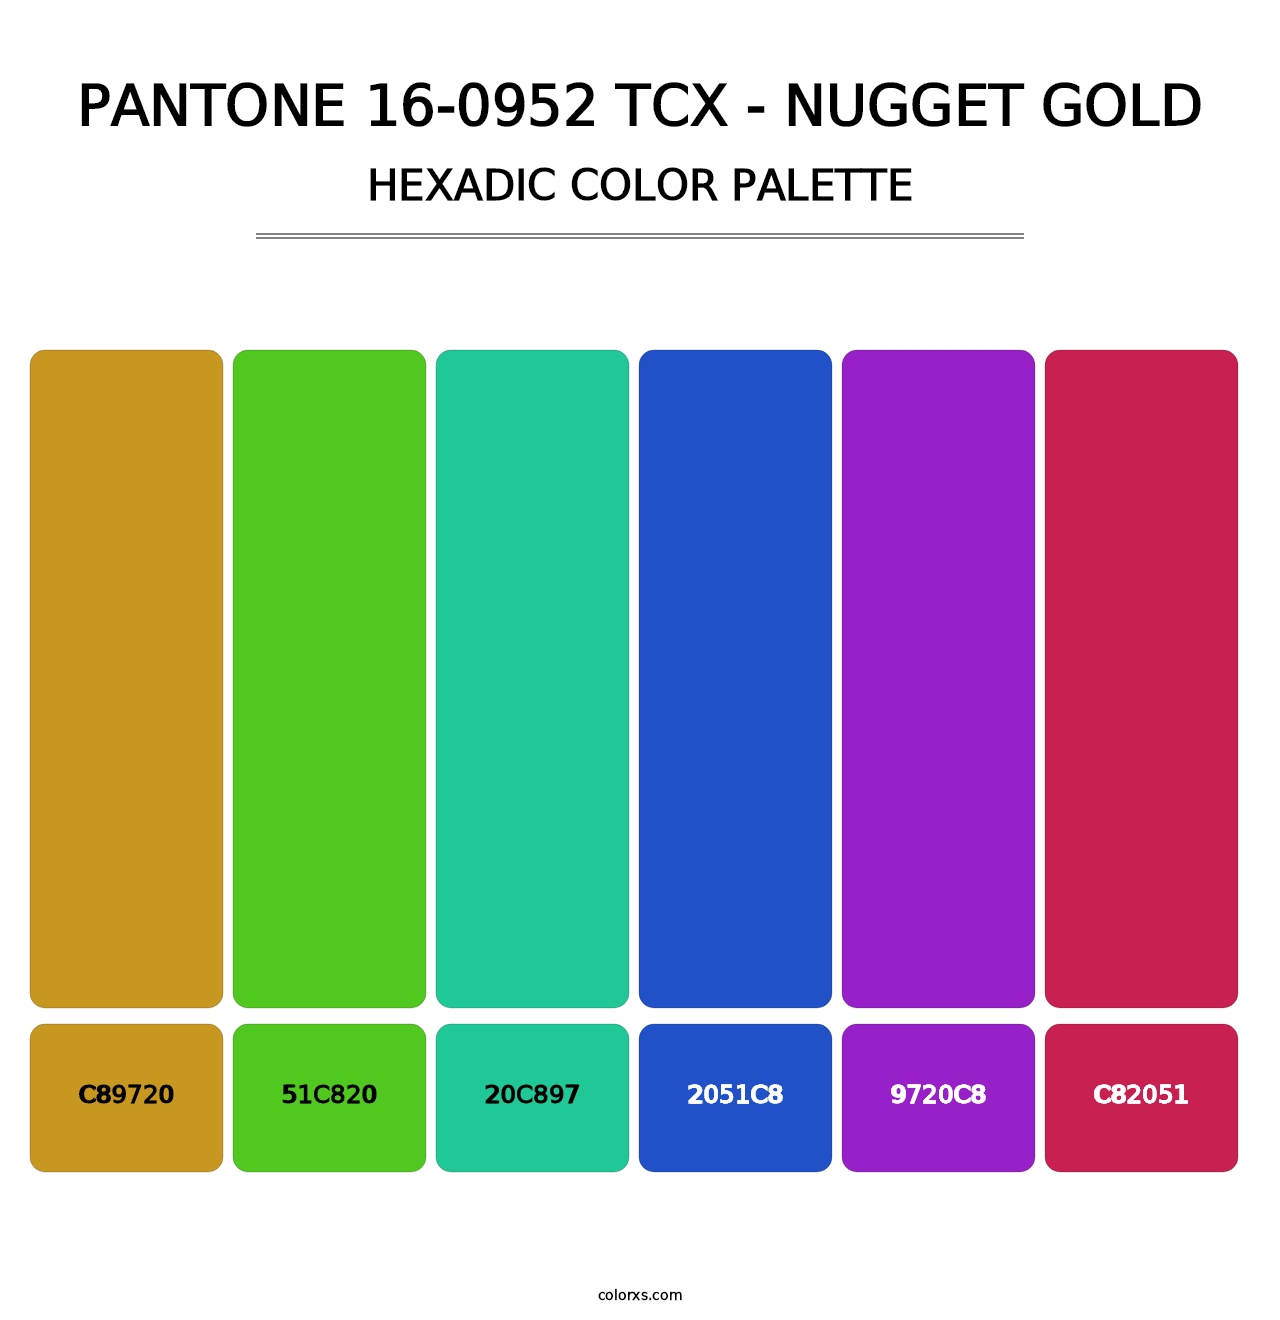 PANTONE 16-0952 TCX - Nugget Gold - Hexadic Color Palette